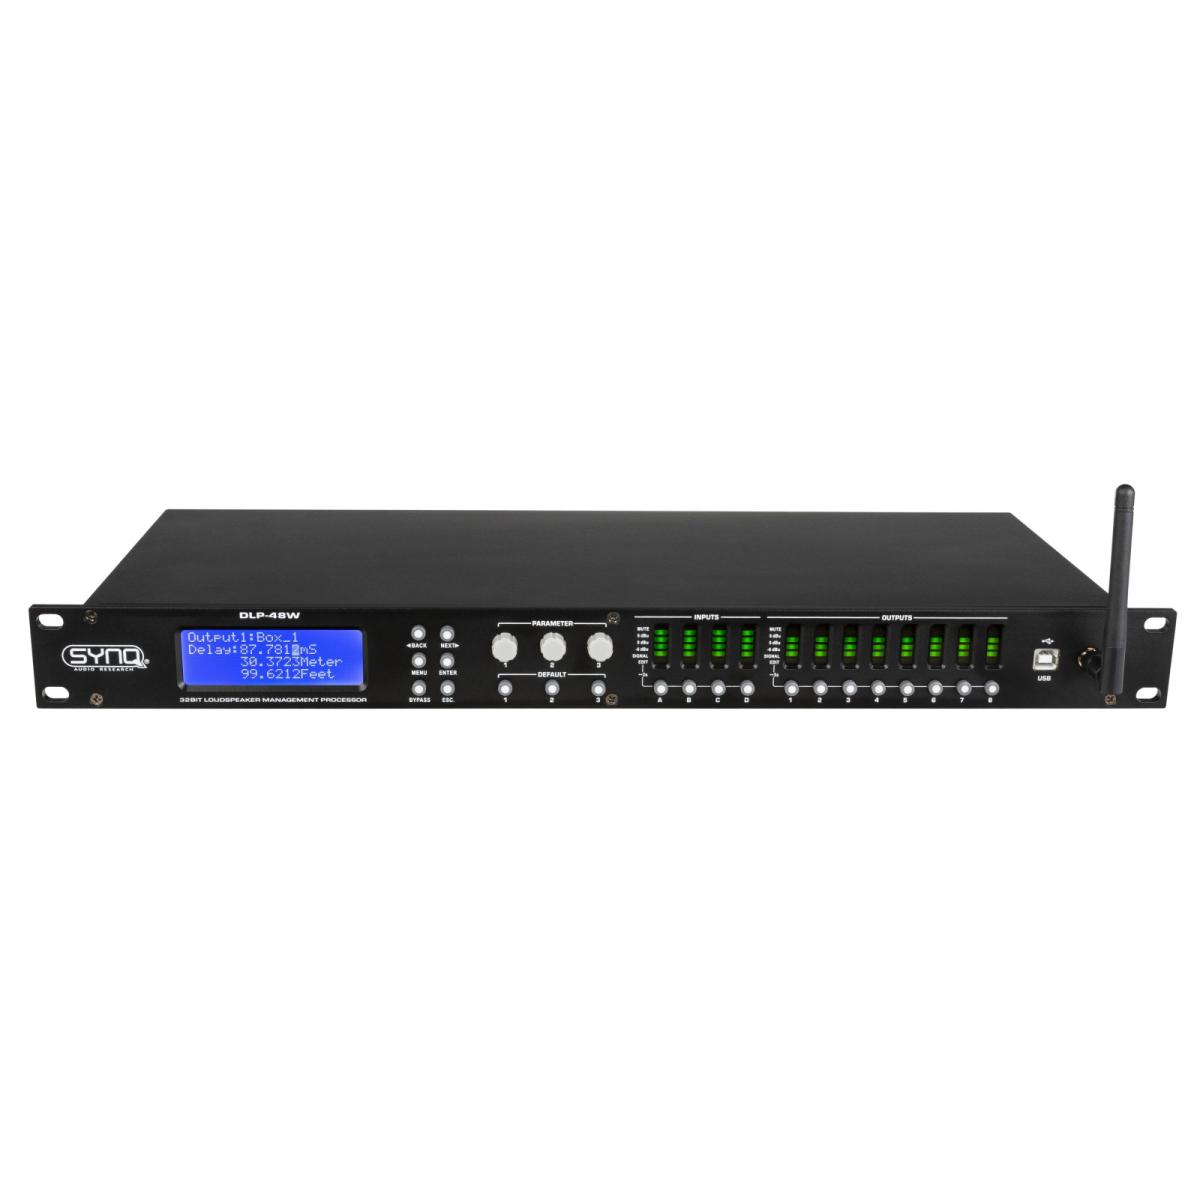 DSP Controller DLP-48W - SYNQ Audio